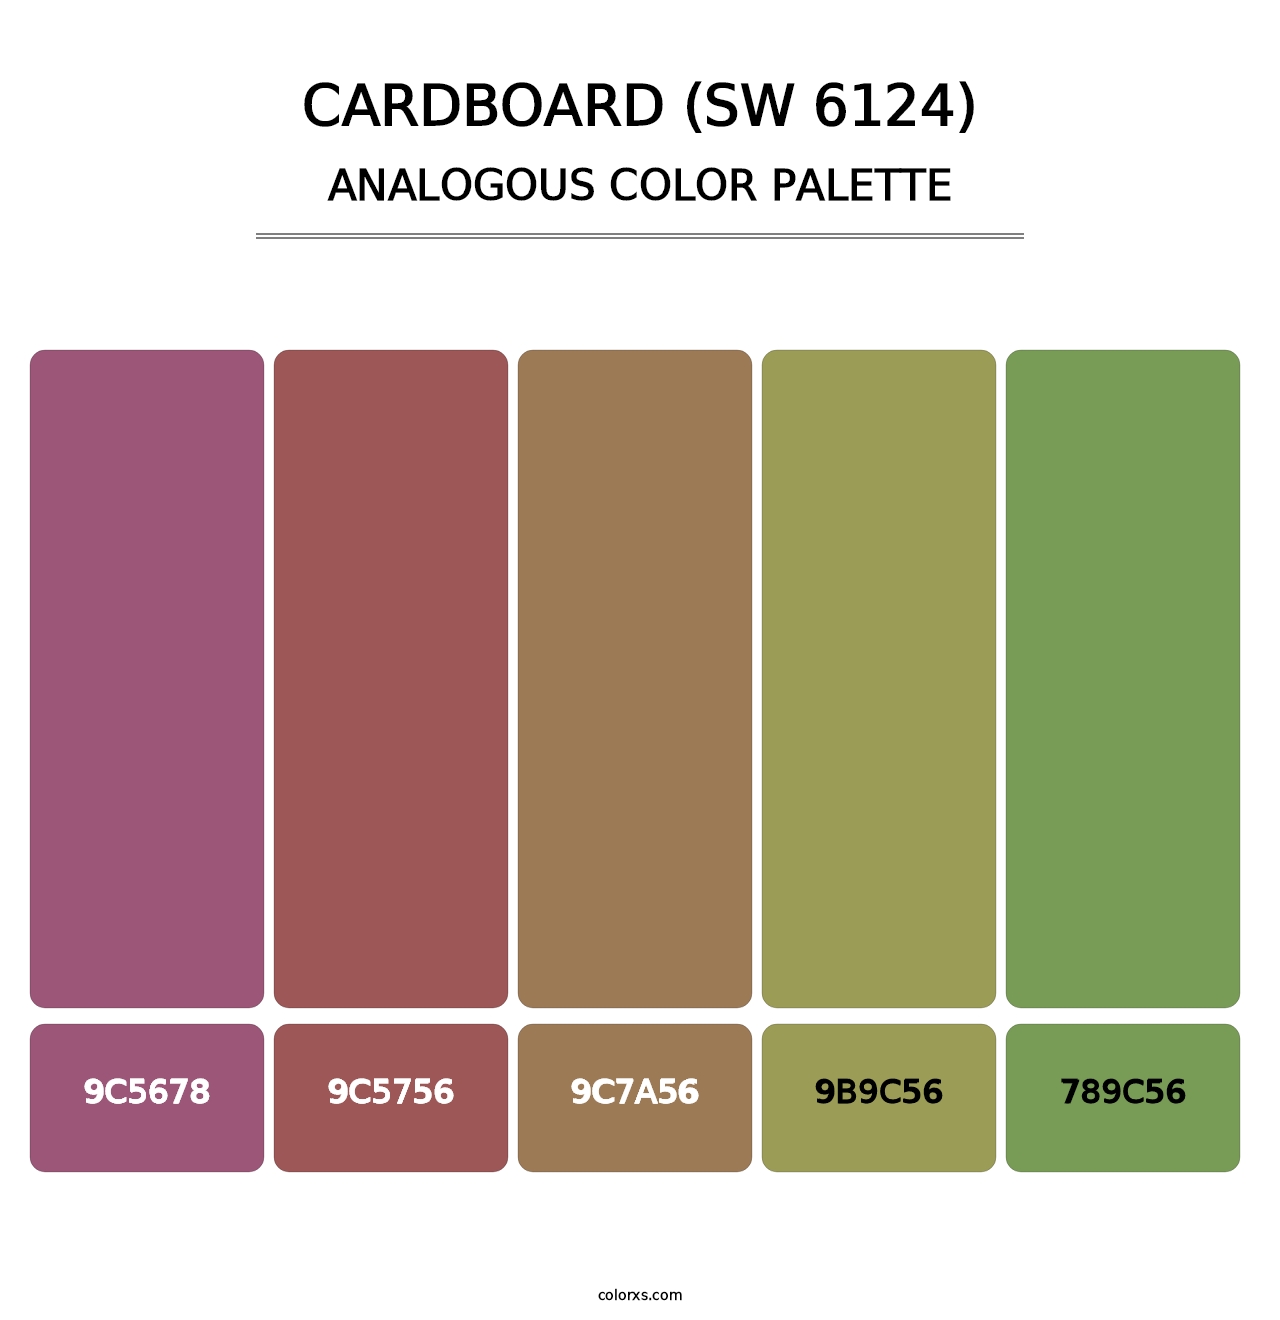 Cardboard (SW 6124) - Analogous Color Palette